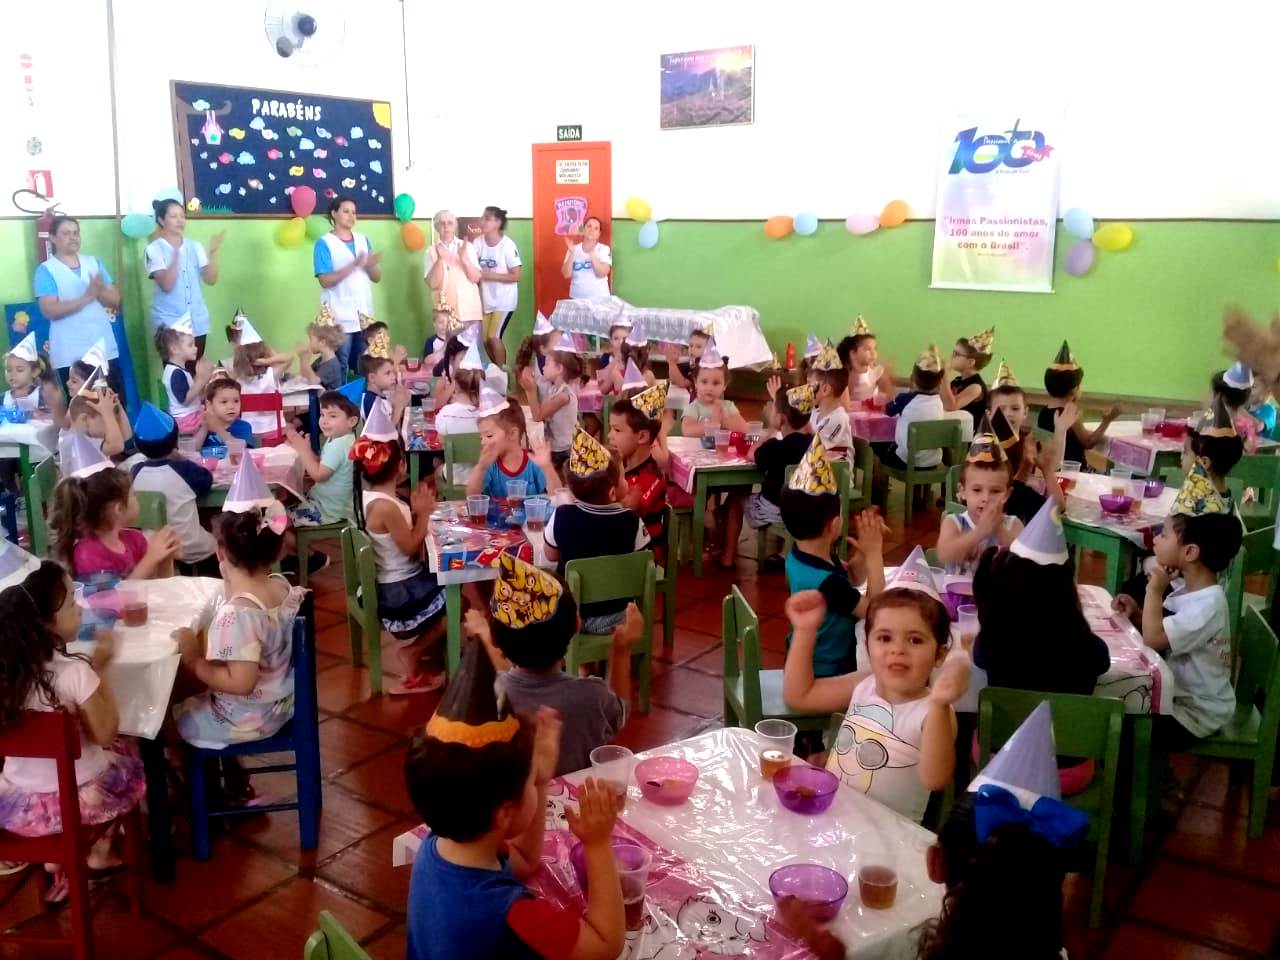 Festa de Dia das Crianas  Centro de Educao Infantil Passionista Joo Paulo II